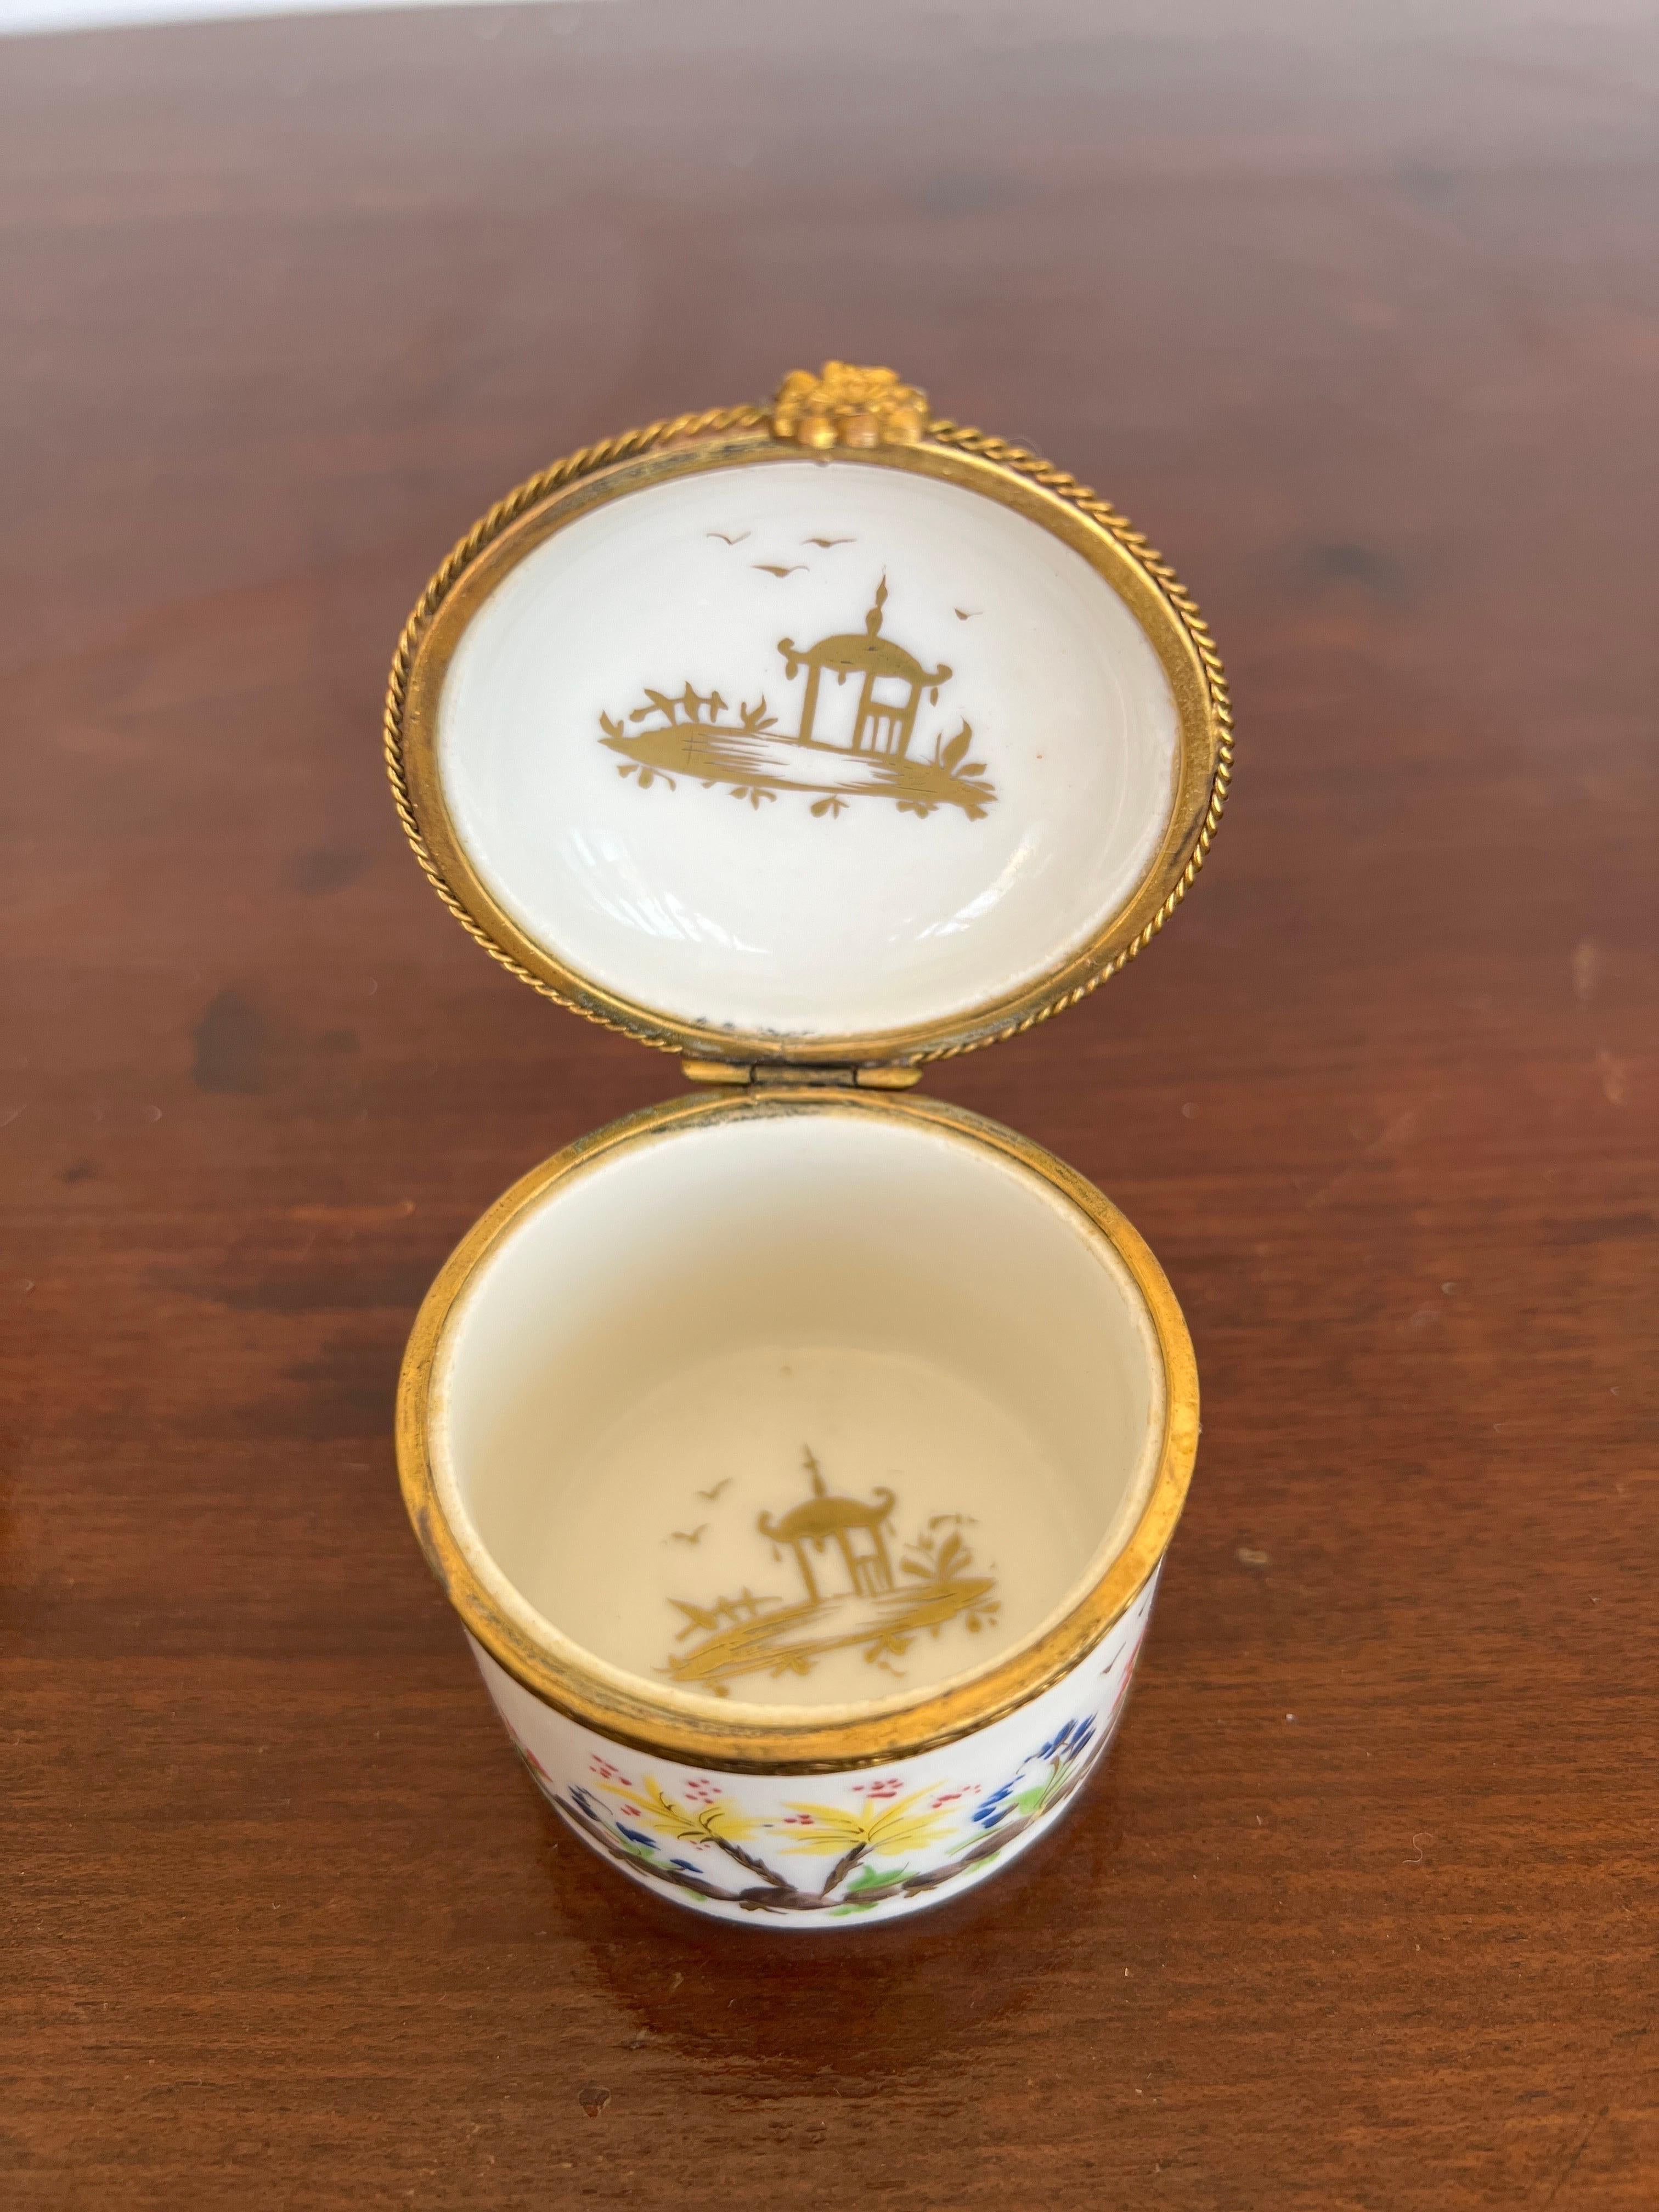 Tiffany Le Tallec Cirque Chinois Porcelain Box In Good Condition For Sale In Atlanta, GA